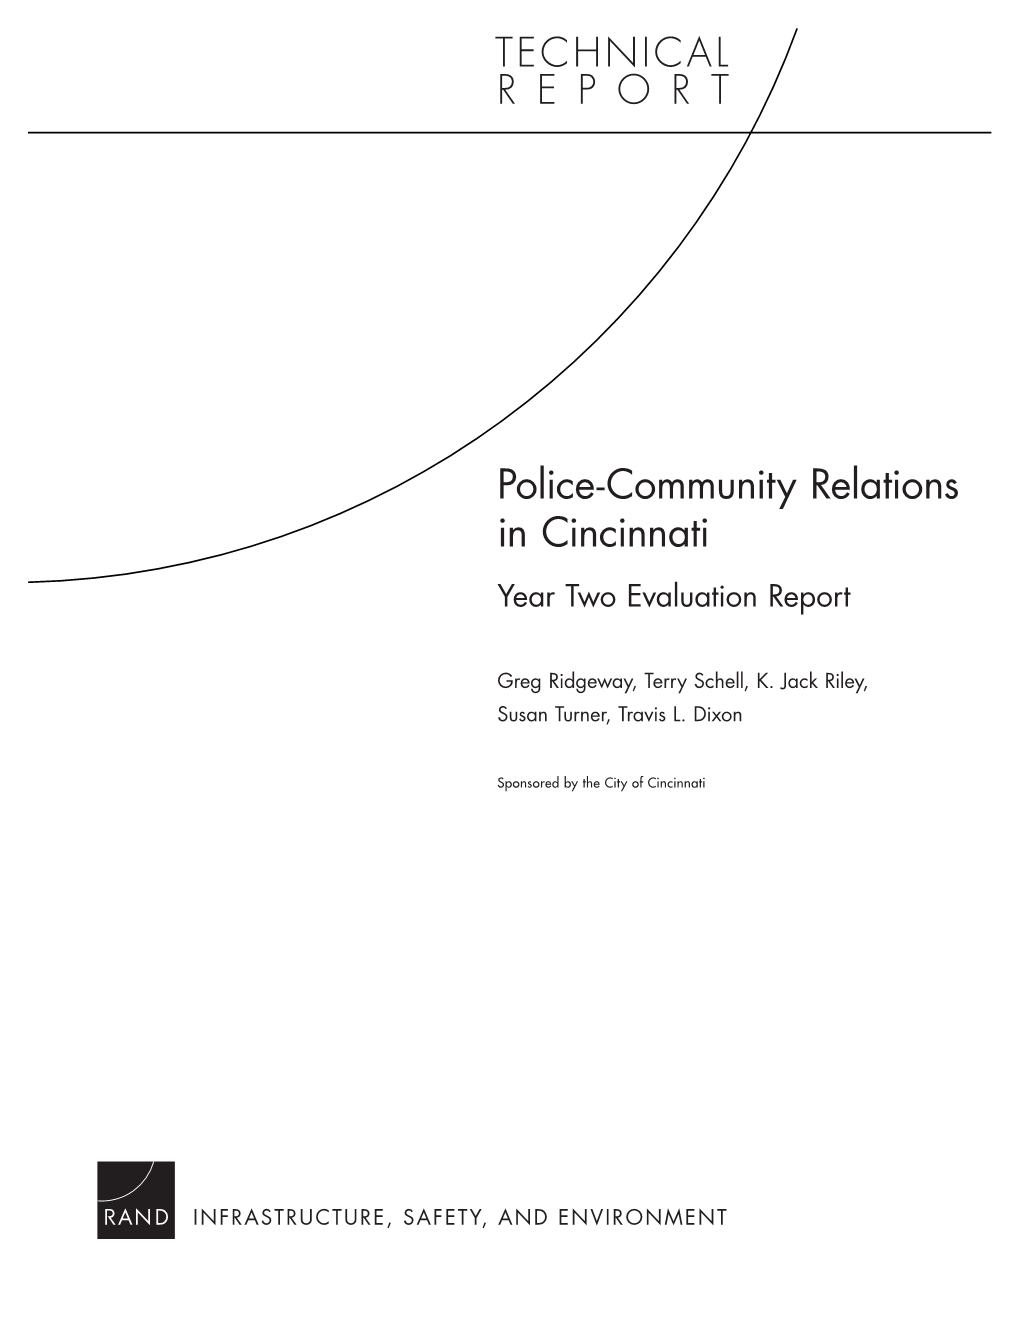 Police-Community Relations in Cincinnati Year Two Evaluation Report